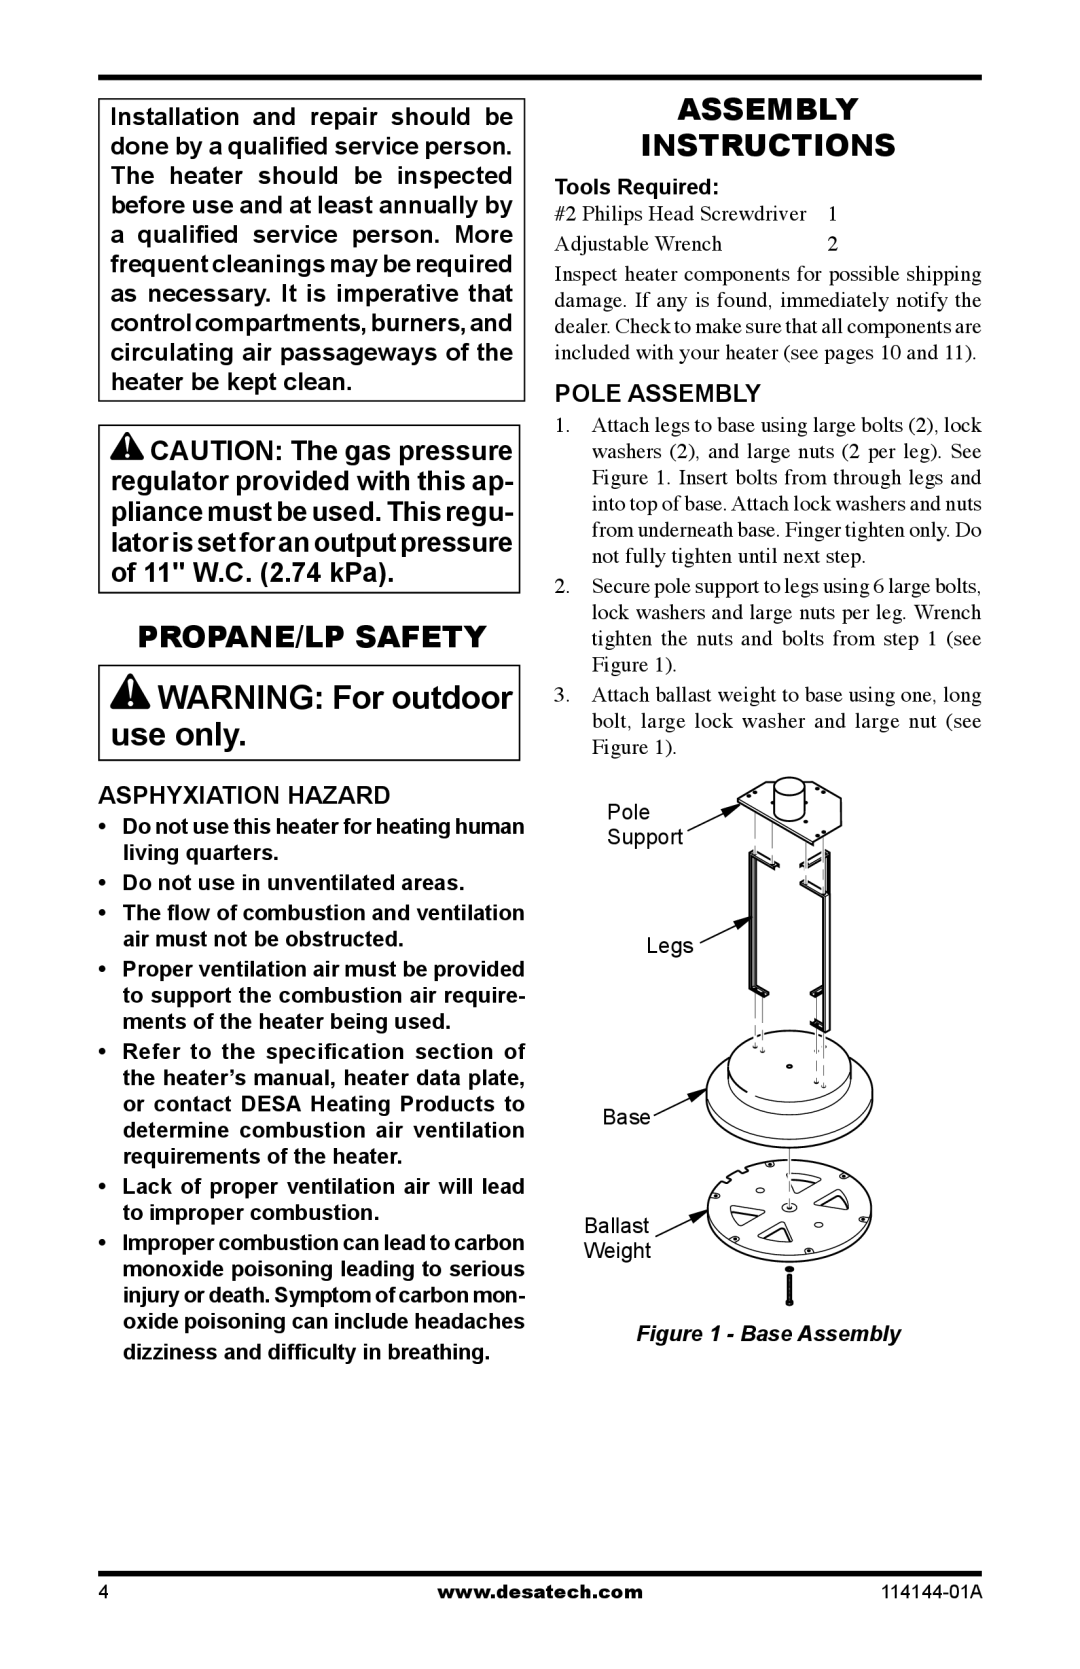 Desa SPC-54PHW owner manual Propane/Lp Safety, Assembly Instructions, Asphyxiation Hazard, Pole Assembly, Base Assembly 